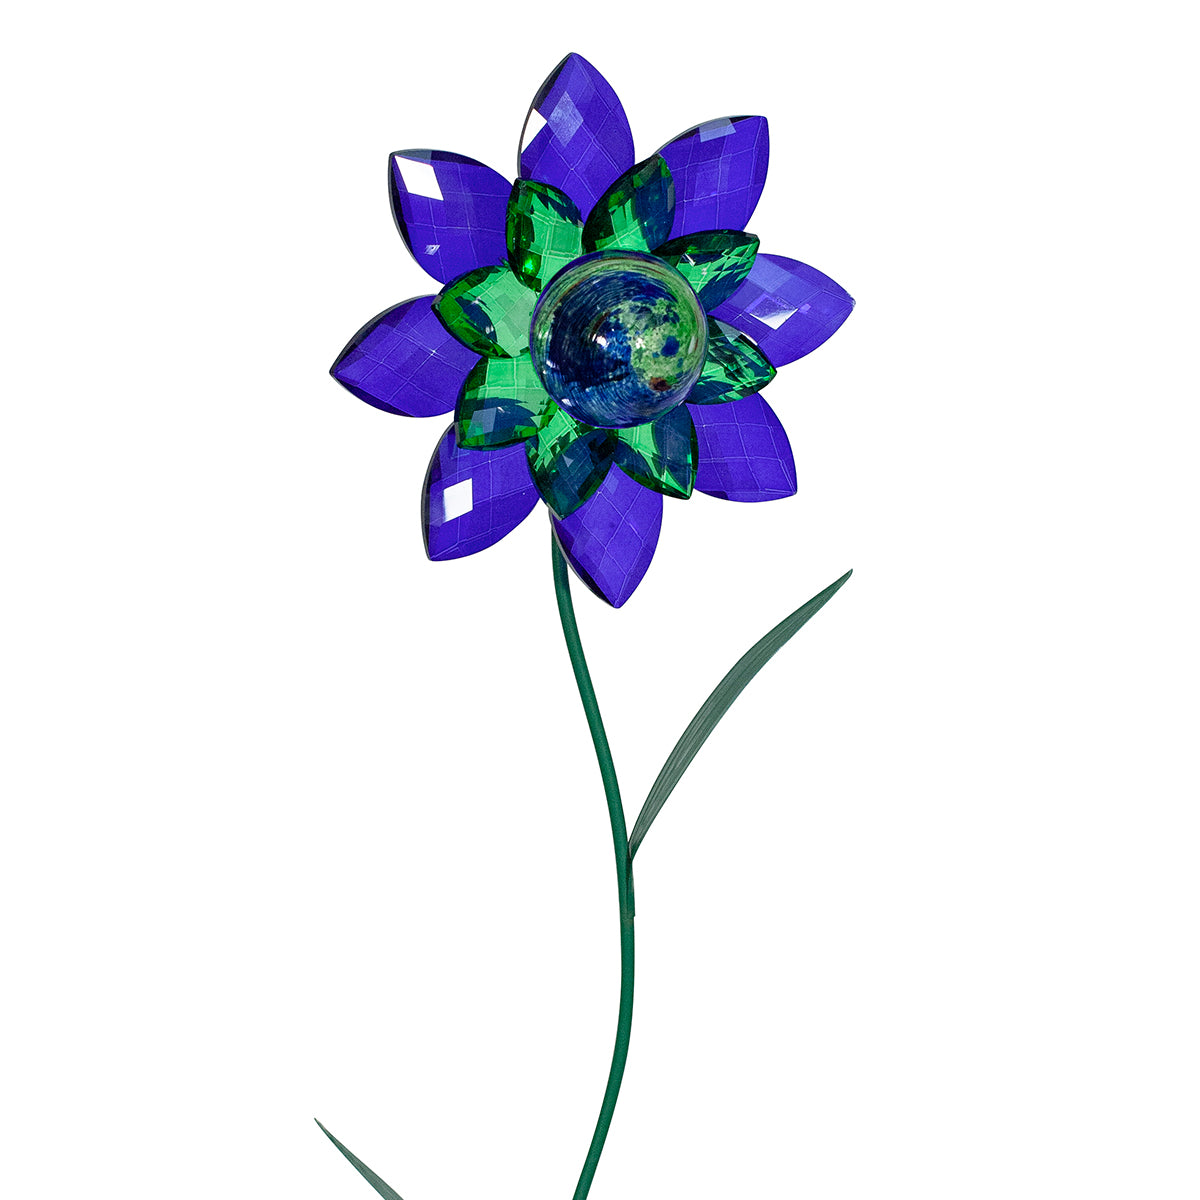 Illuminarie Gem Flower Stake - Blue/Green